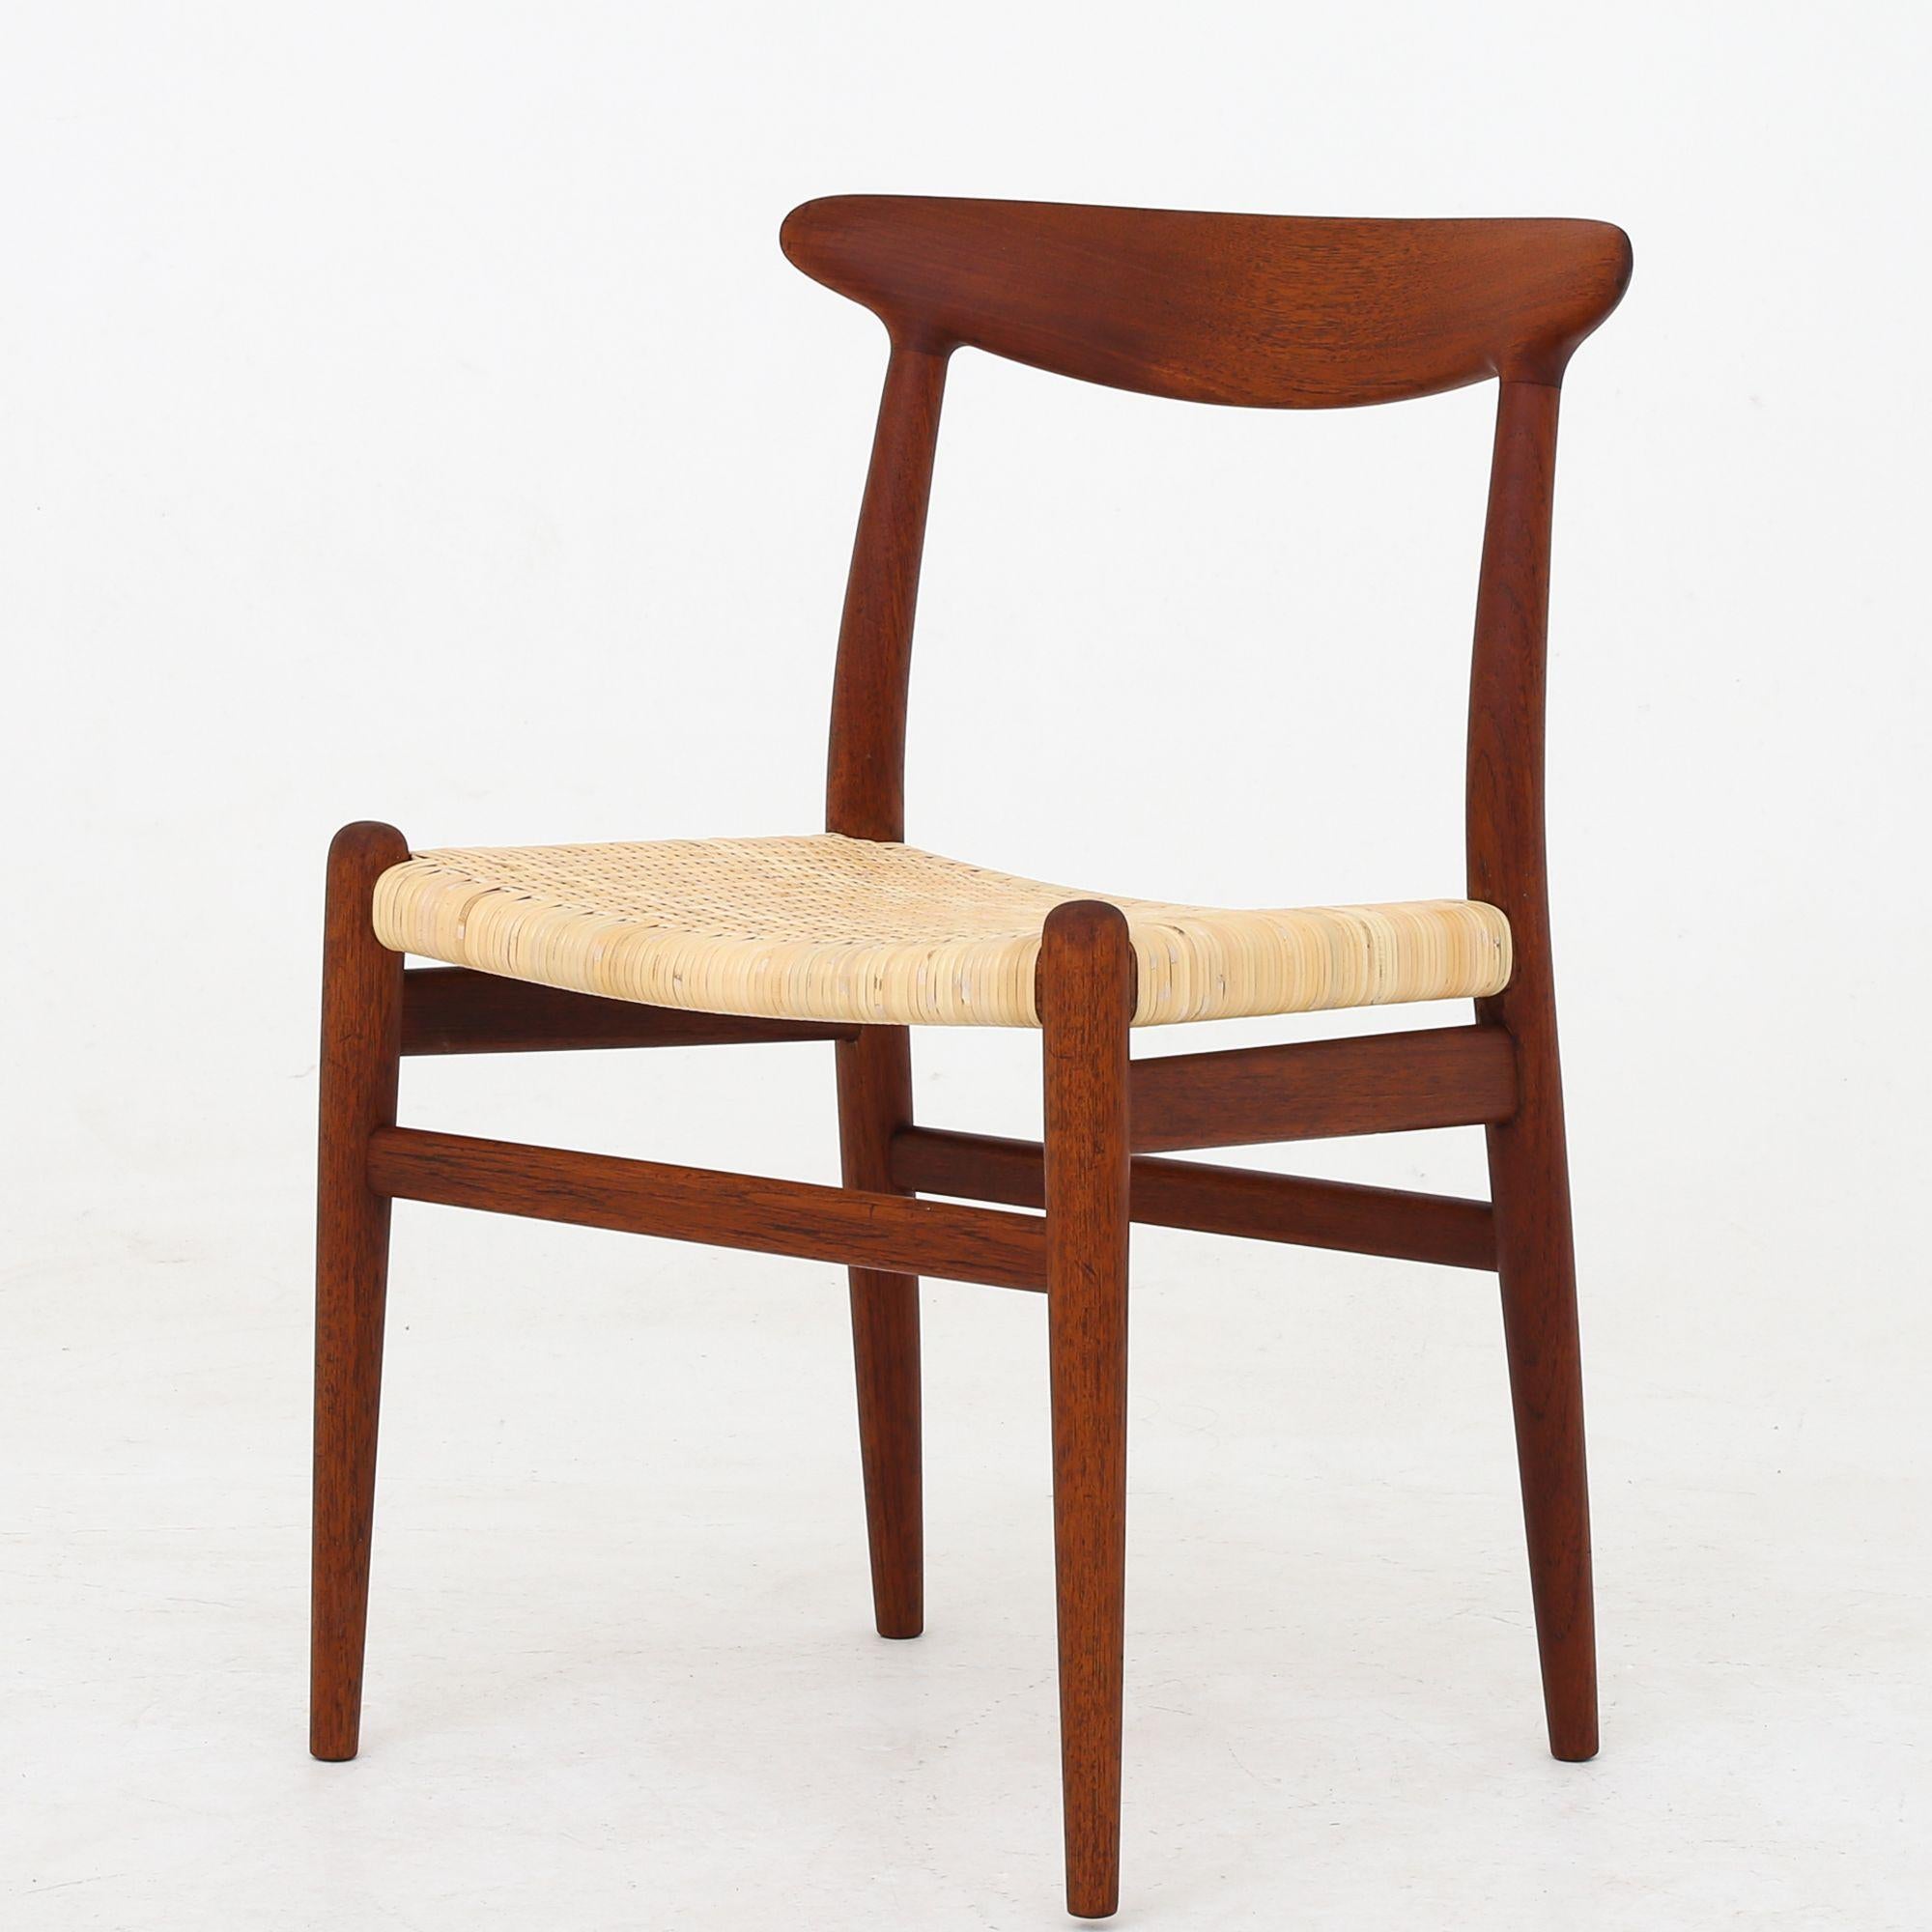 W2 - Solid teak chair with new cane. Hans J. Wegner / C. M. Madsen.